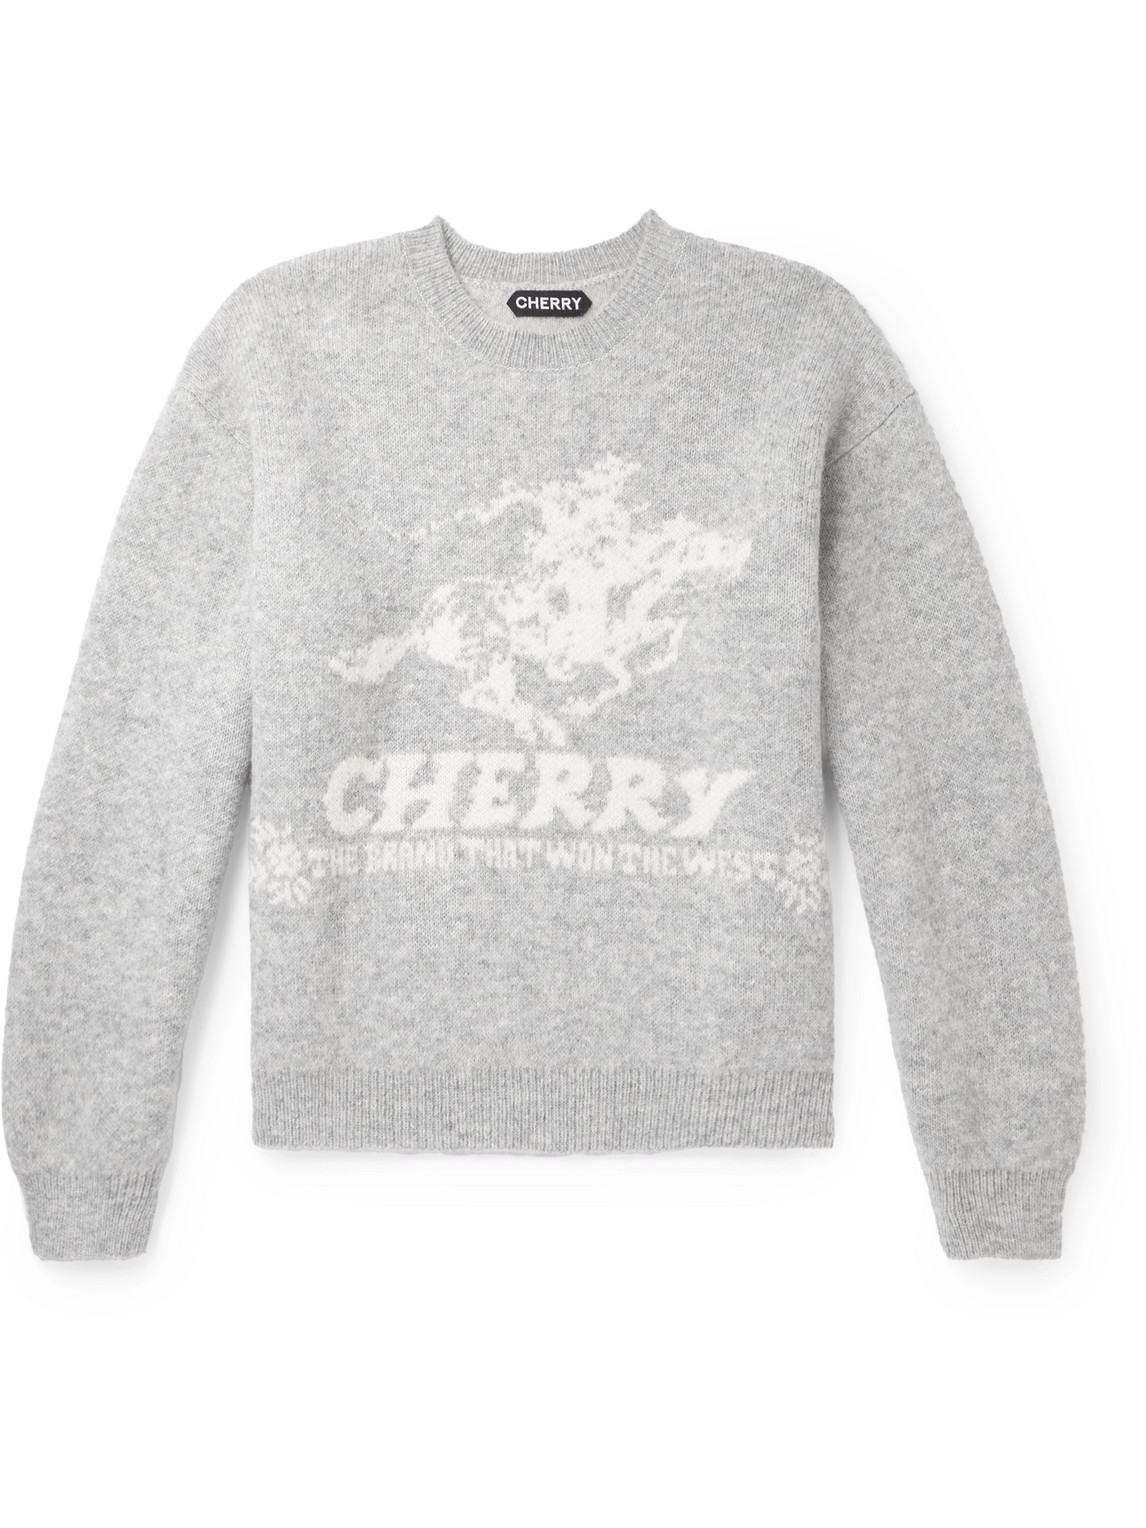 Cherry Los Angeles Intarsia-knit Alpaca-blend Sweater In Gray